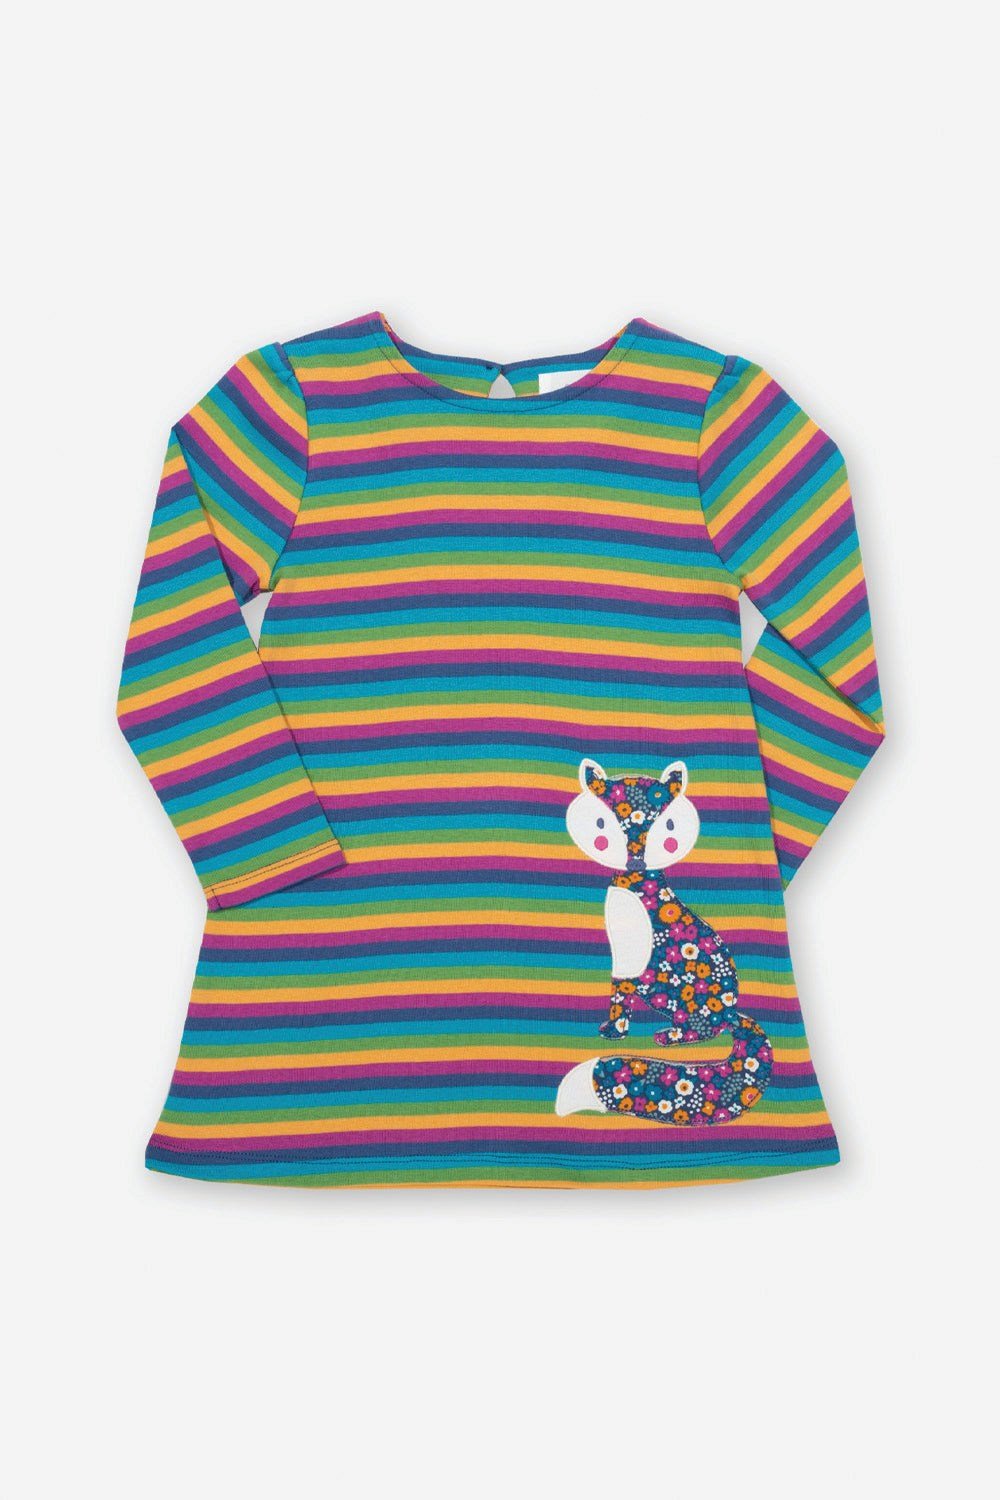 Faraway Fox Baby/Kids Rainbow Dress -